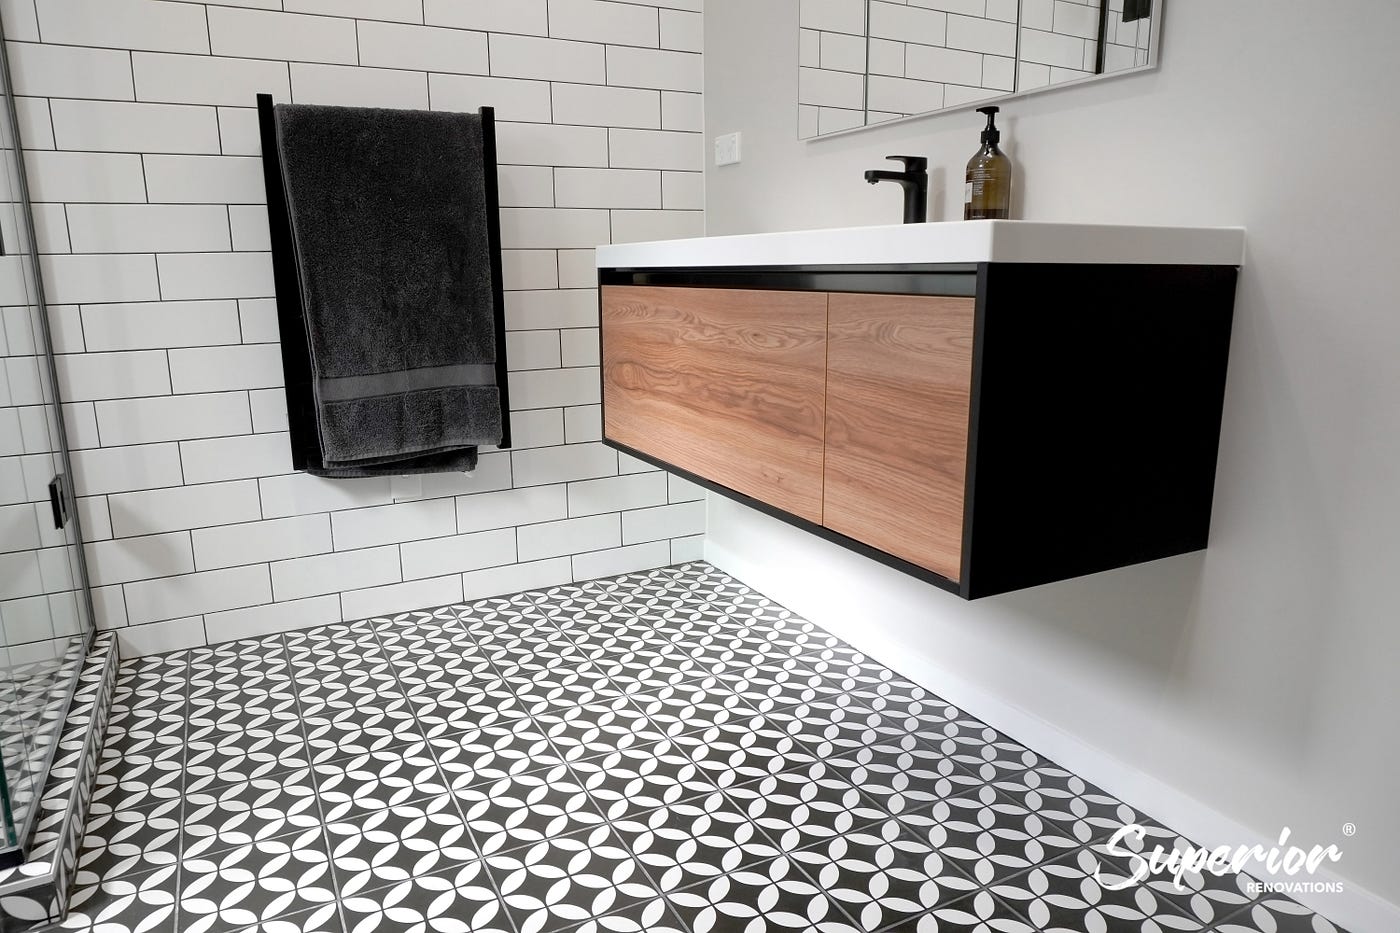 15 BATHROOM IDEAS FOR SMALL BATHROOM DESIGNS IN AUCKLAND – 2021